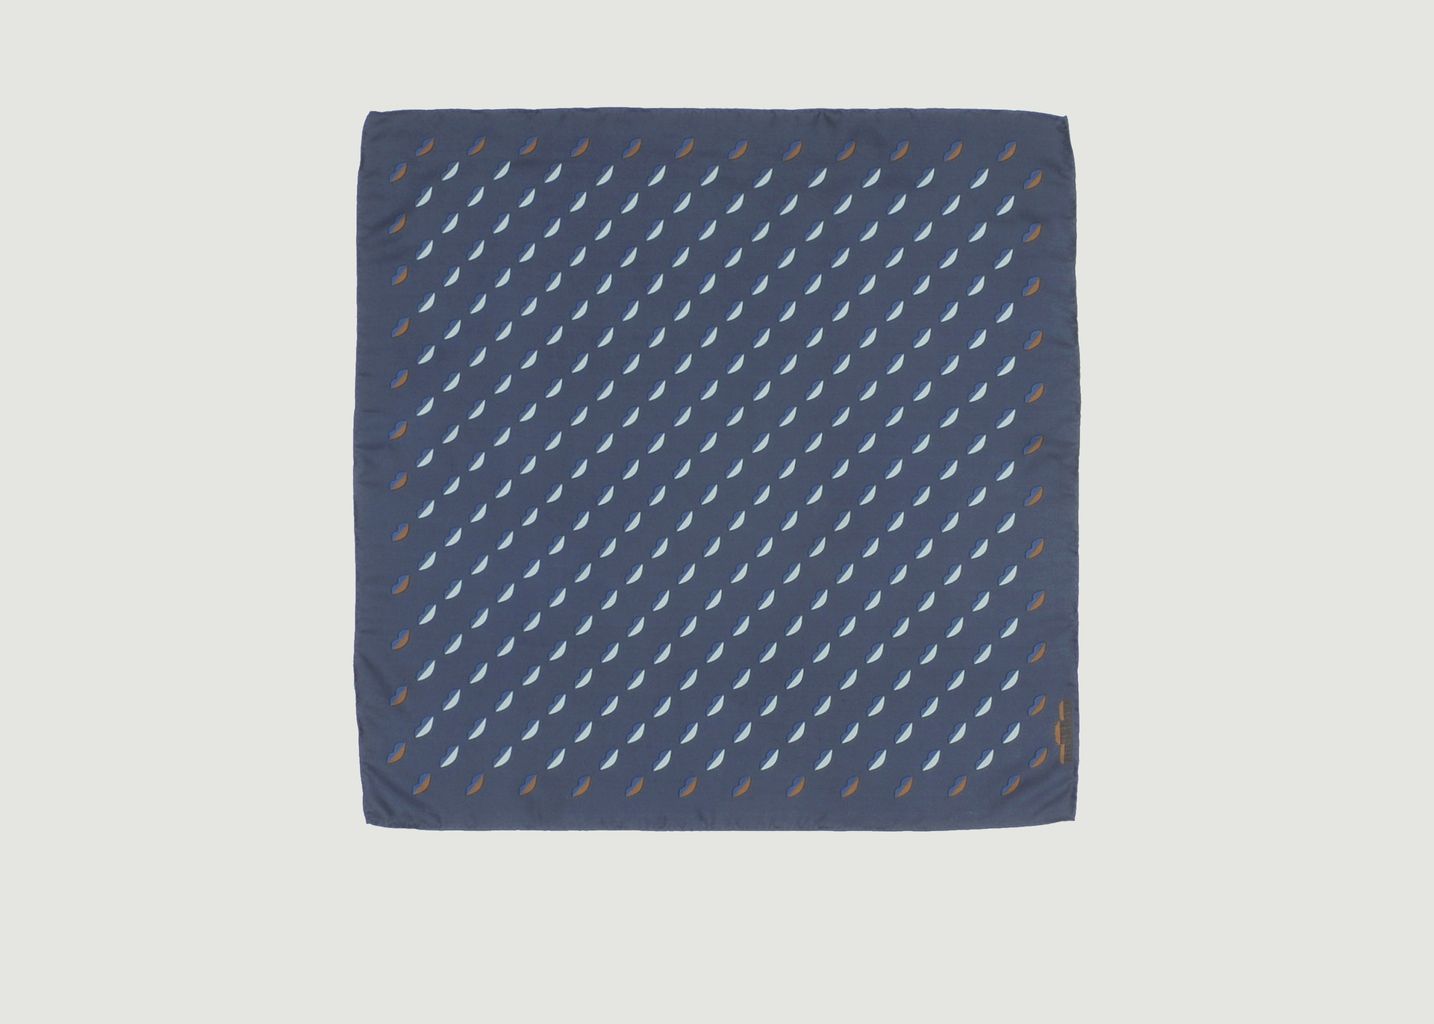 N°435 mouths pattern silk square scarf - Moismont